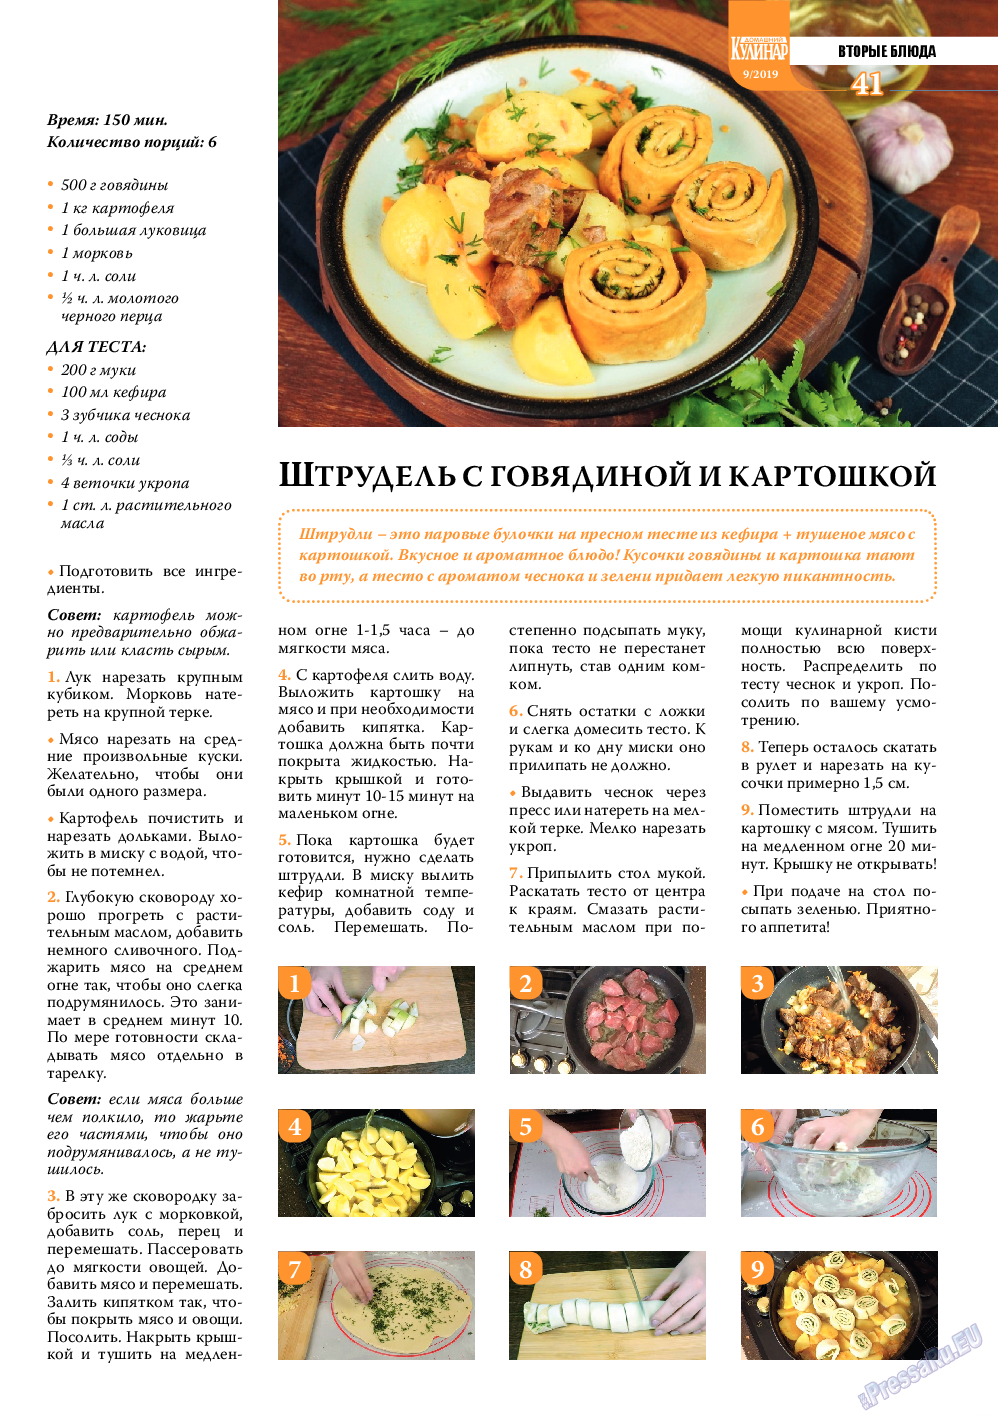 Домашний кулинар (журнал). 2019 год, номер 9, стр. 41